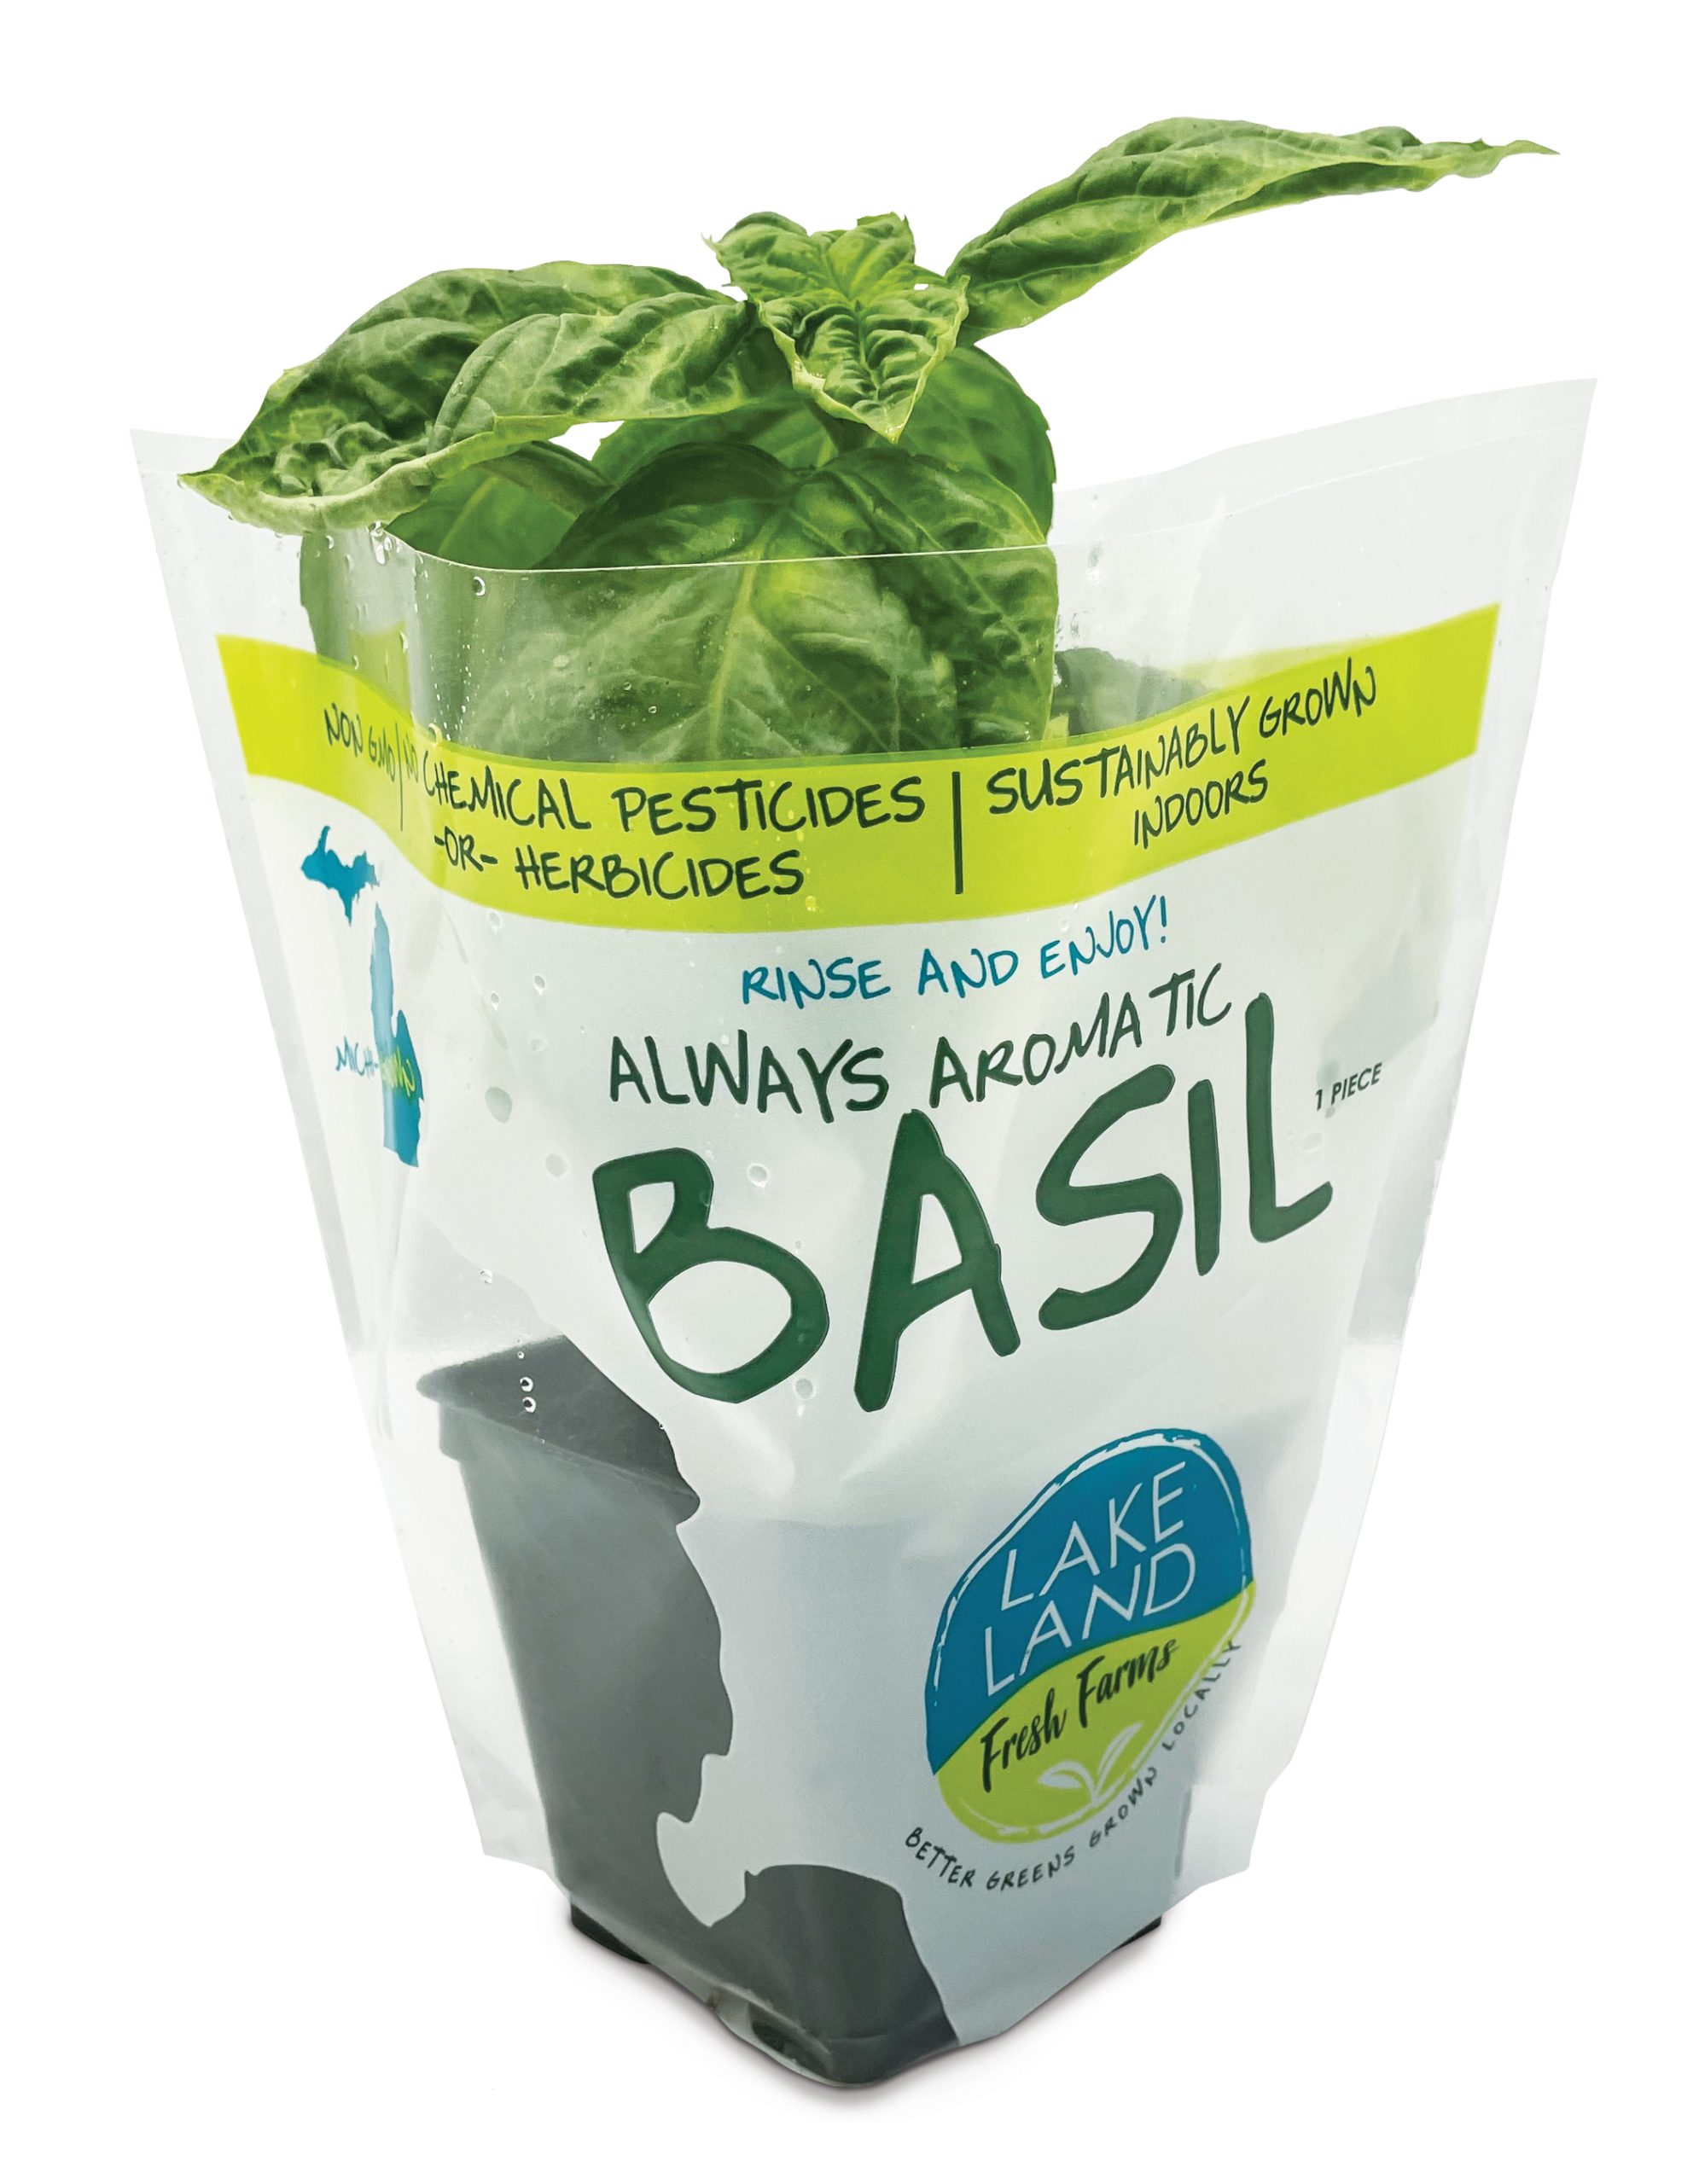 4" Live Always Aromatic Basil Plant